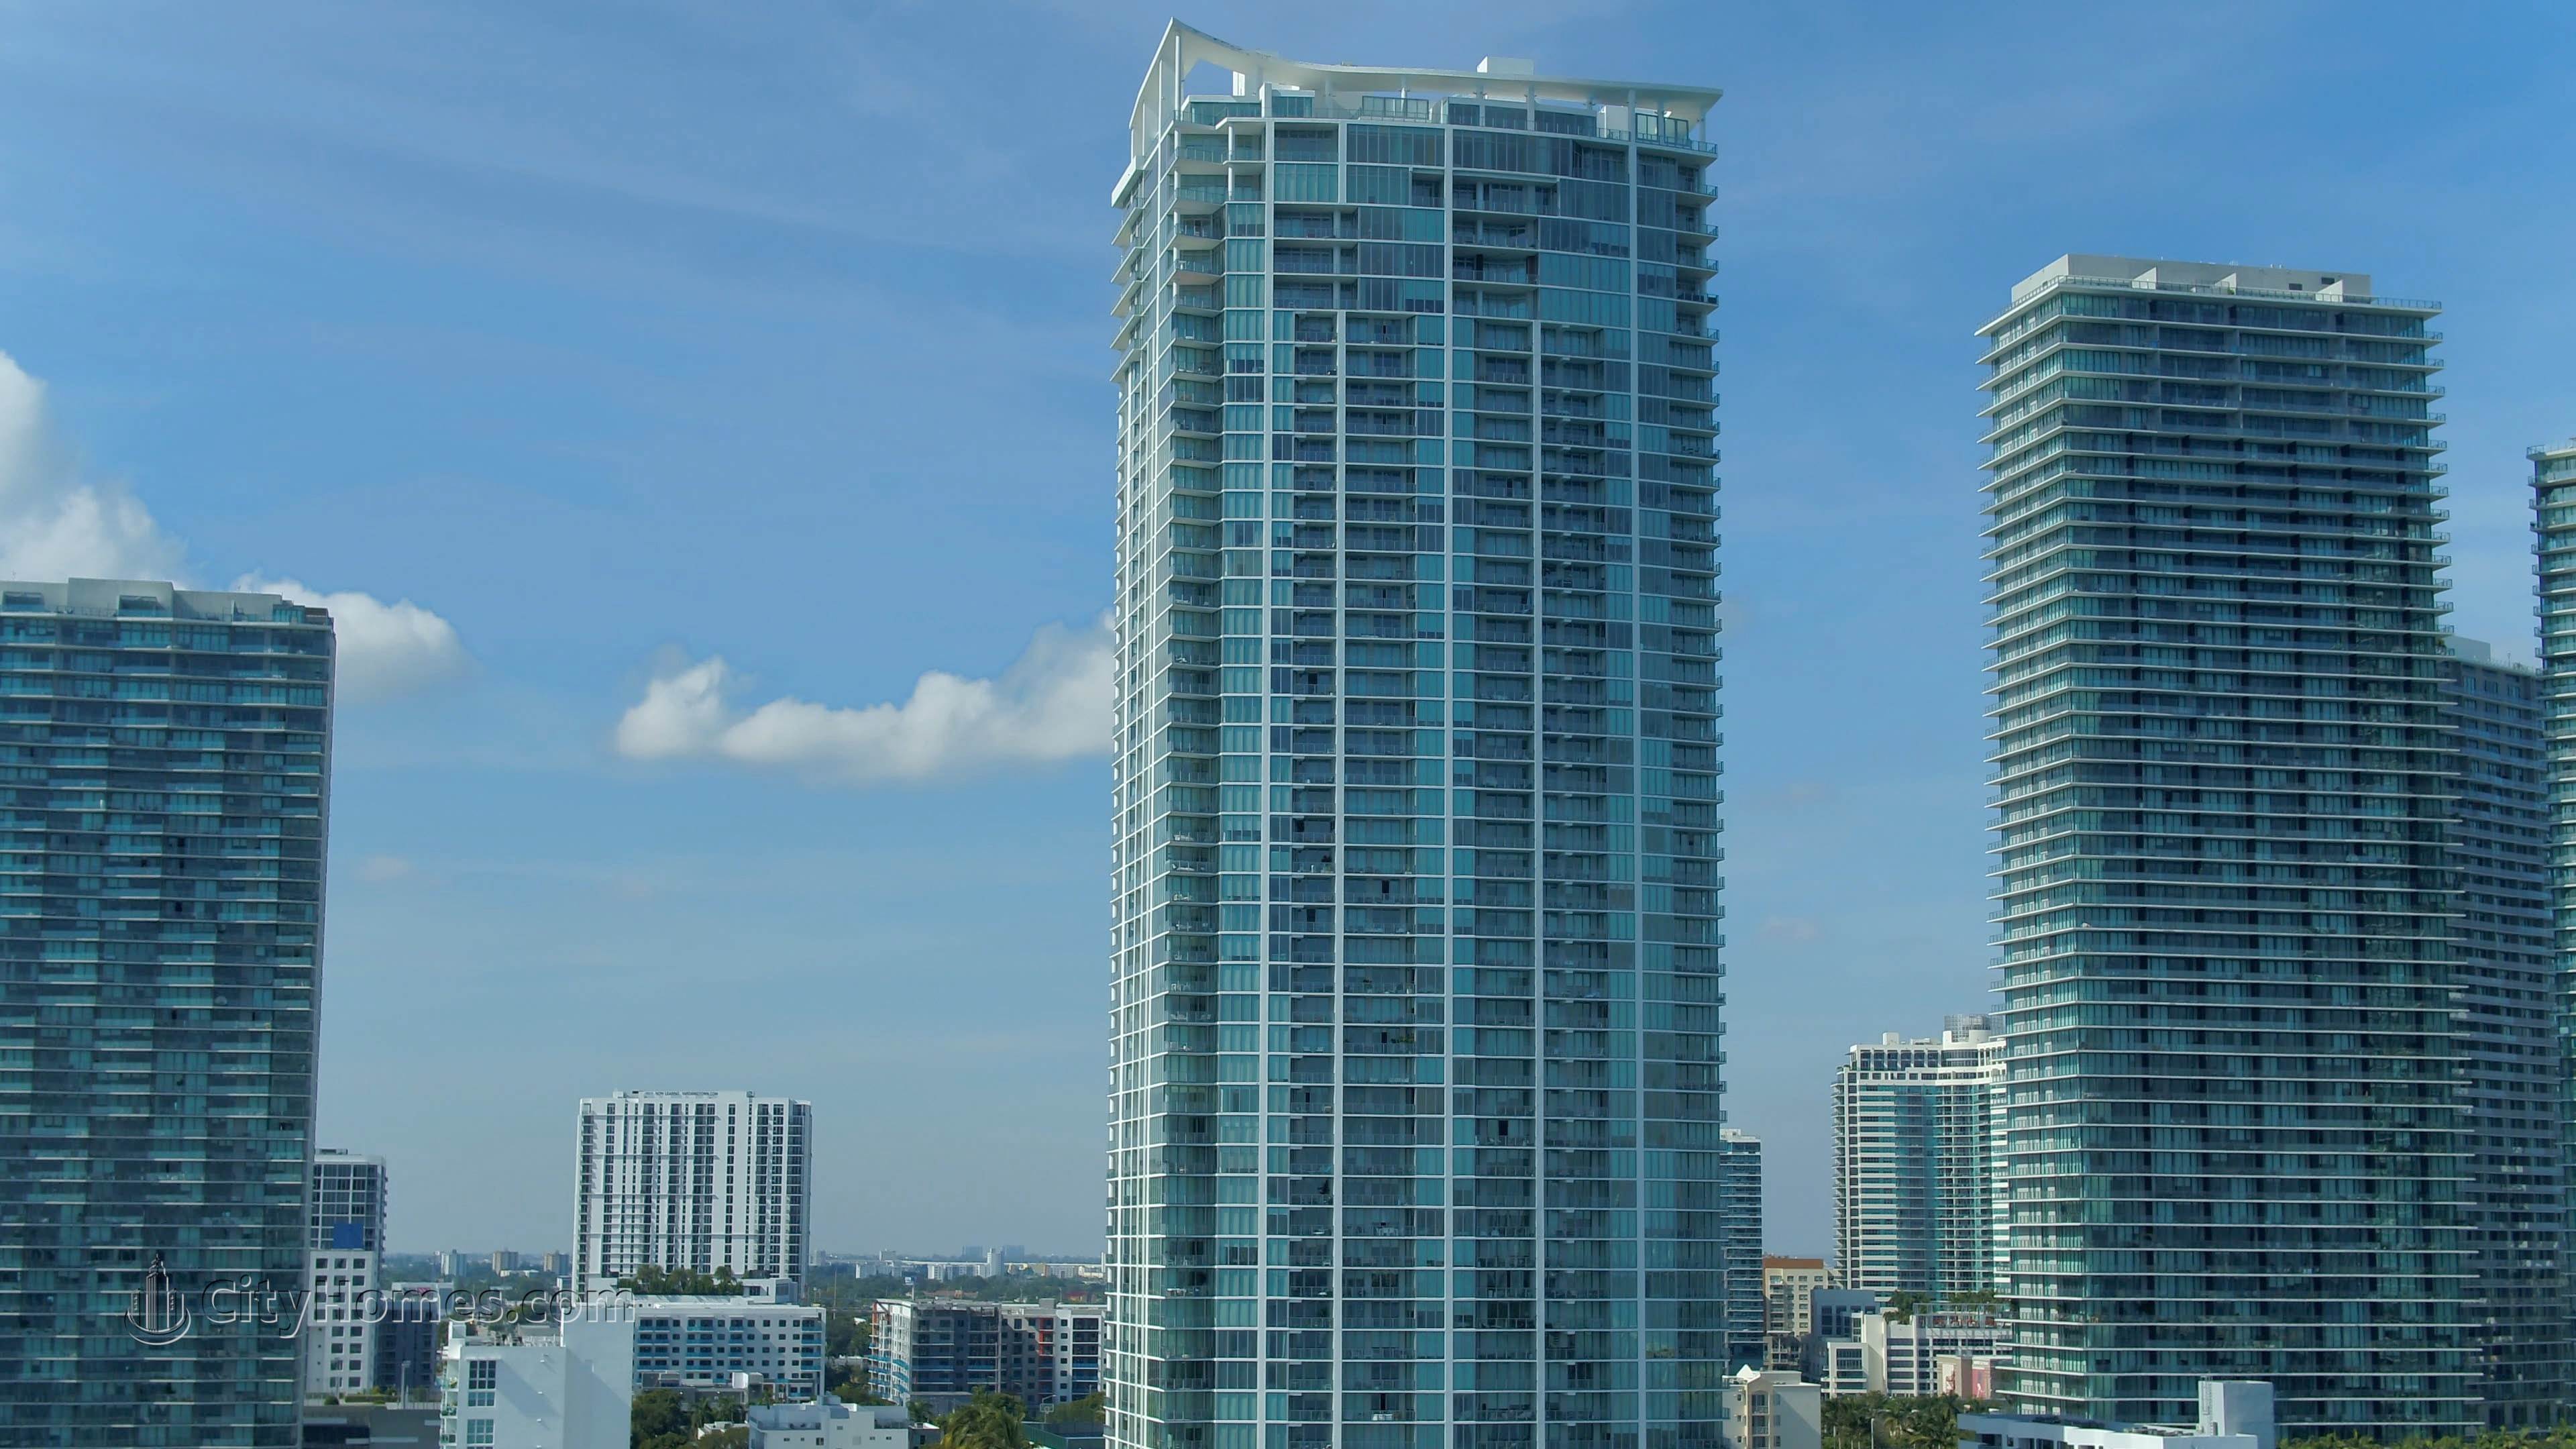 2. Biscayne Beach building at 2900 NE 7th Avenue, Edgewater, Miami, FL 33137